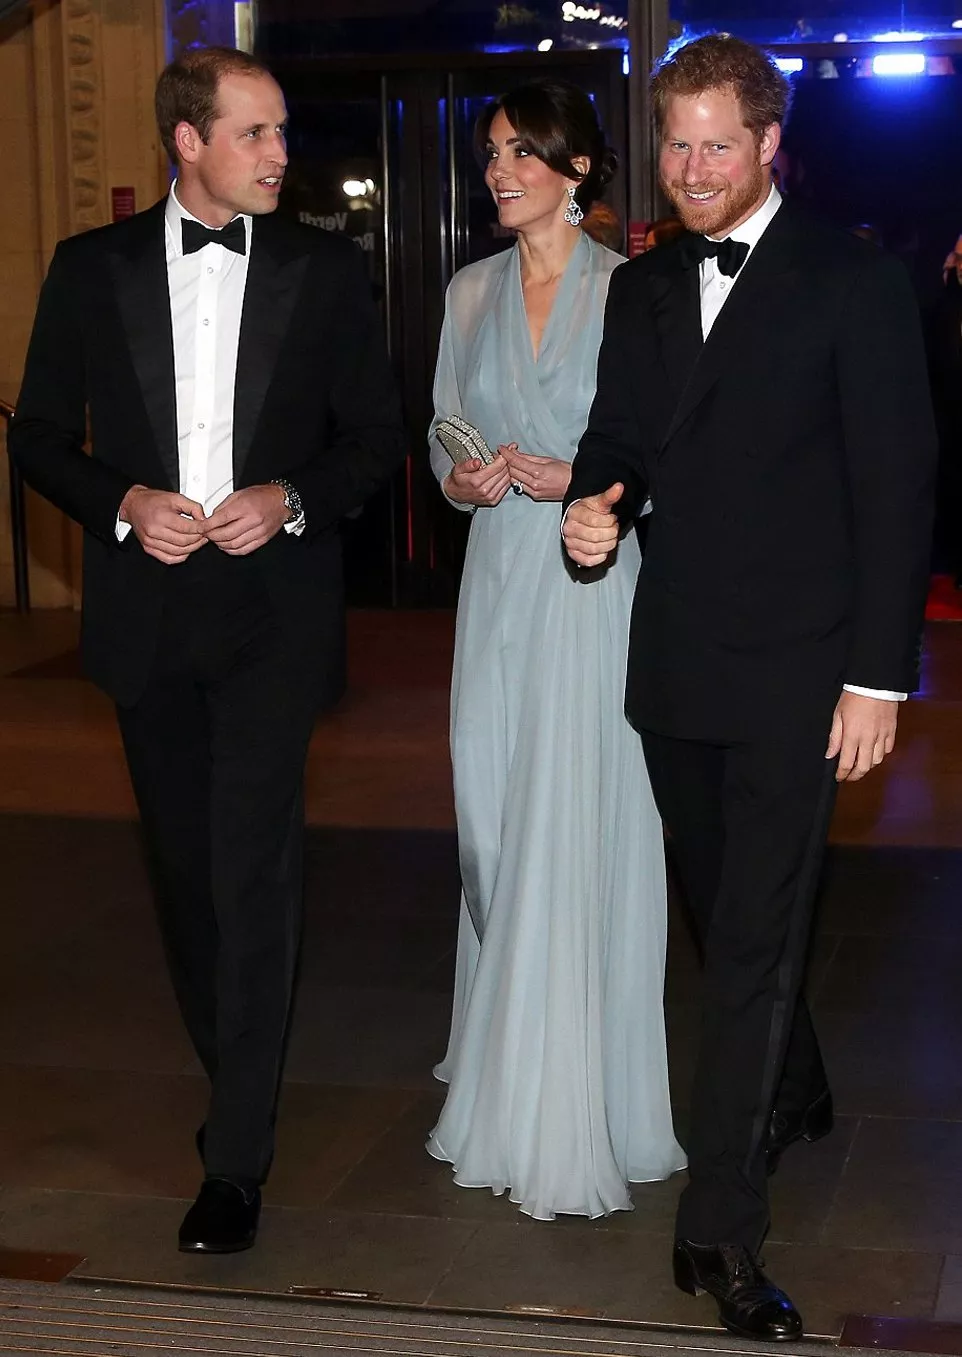 Kate Middleton في أجمل إطلالة لها للعام 2015